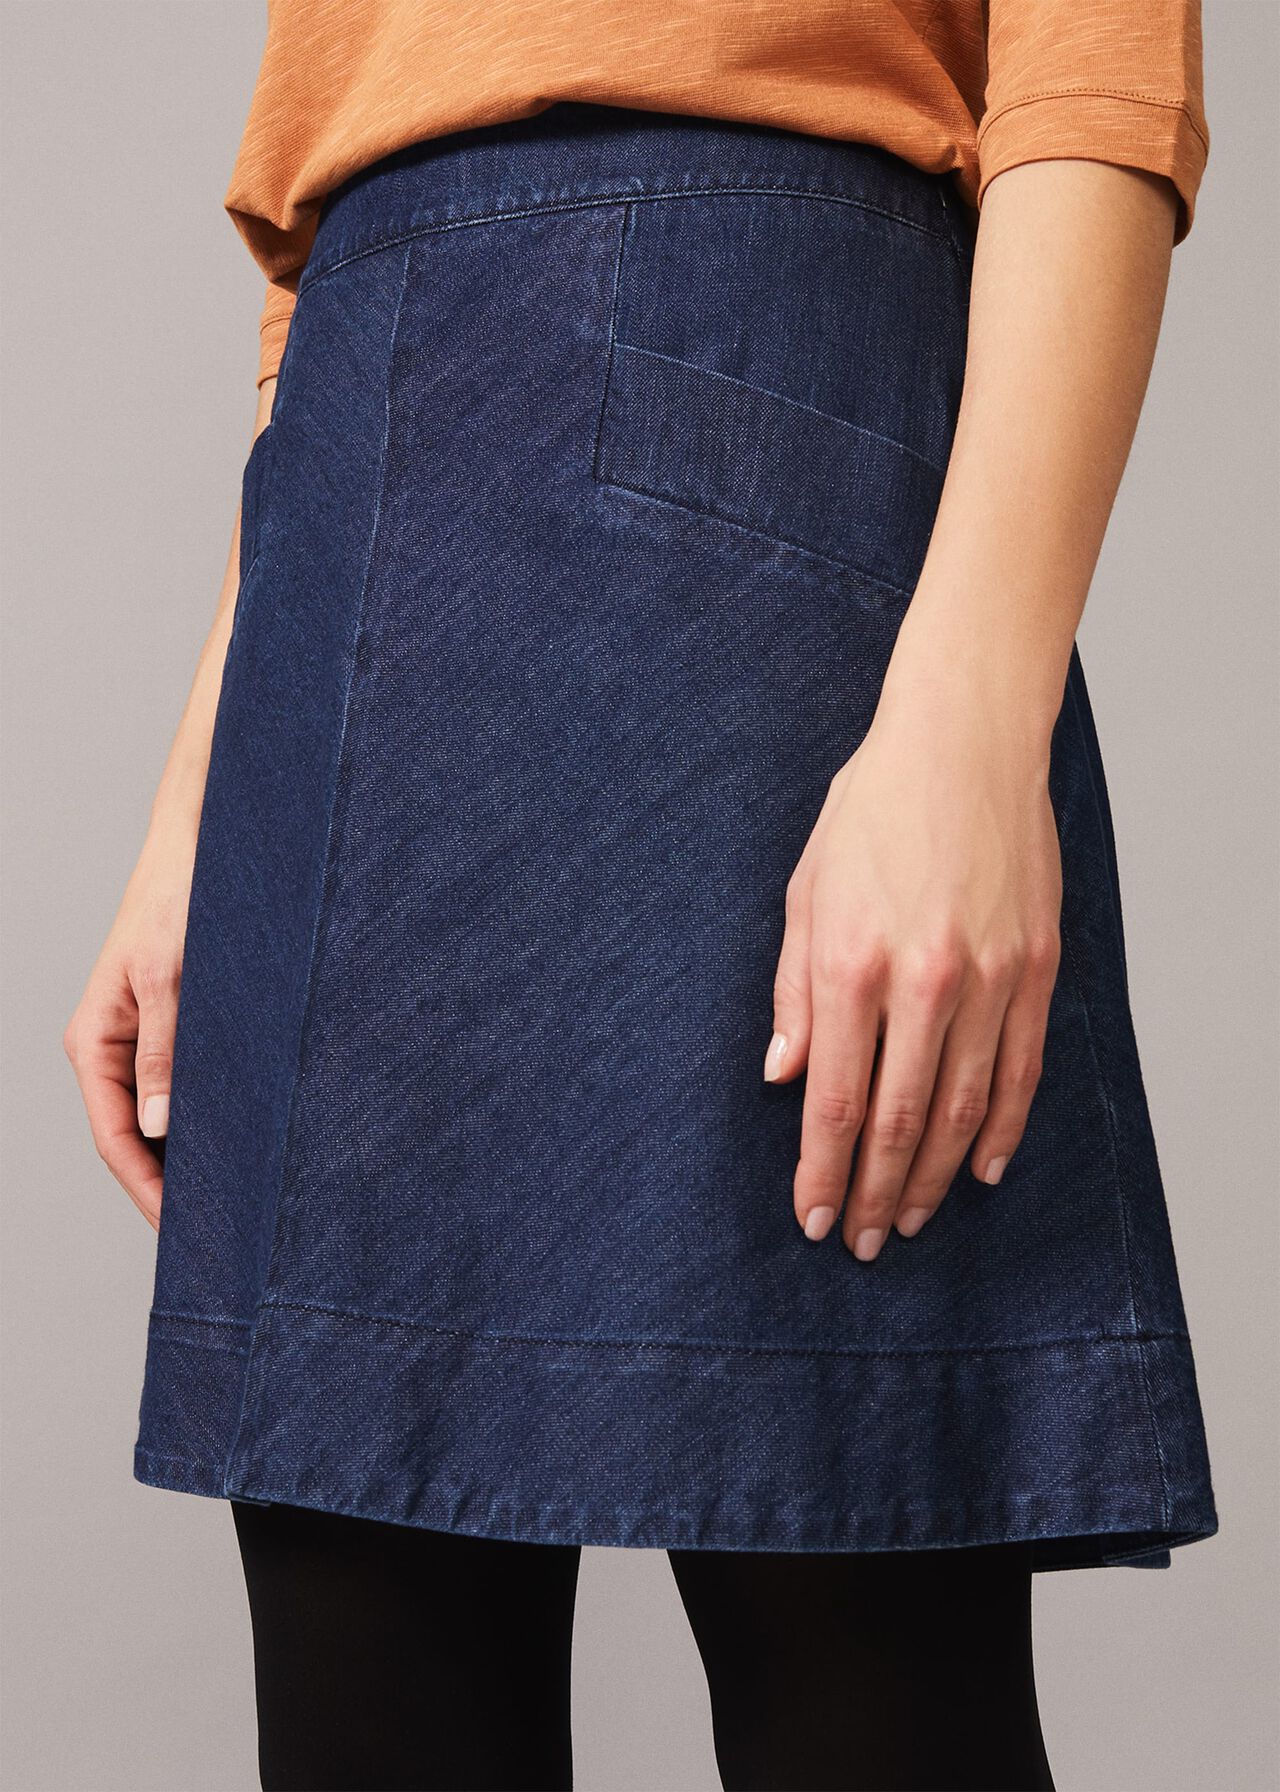 Inkiri A-Line Denim Skirt